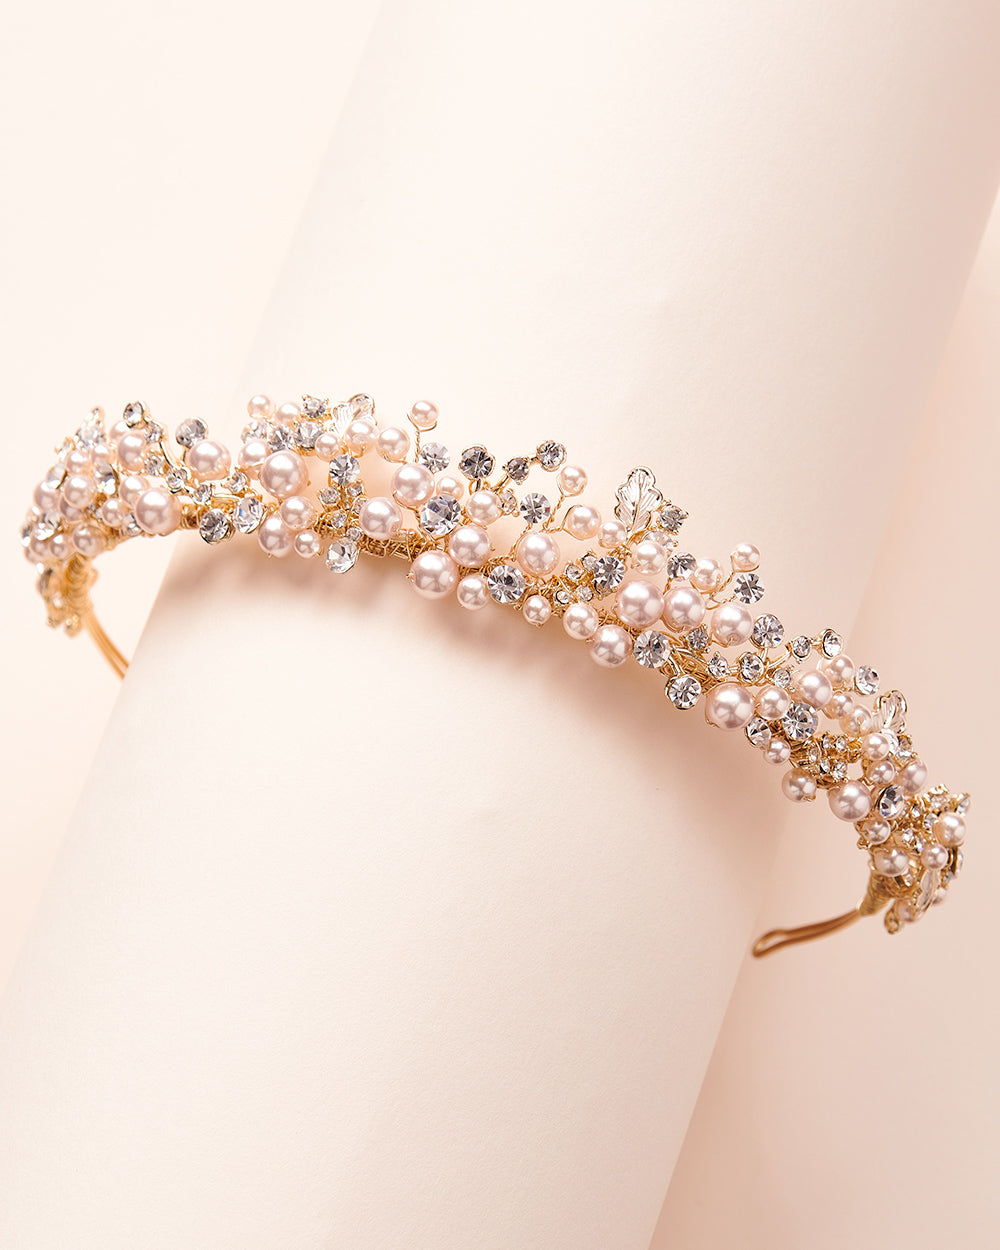 Gold Wedding Tiara with Pearls